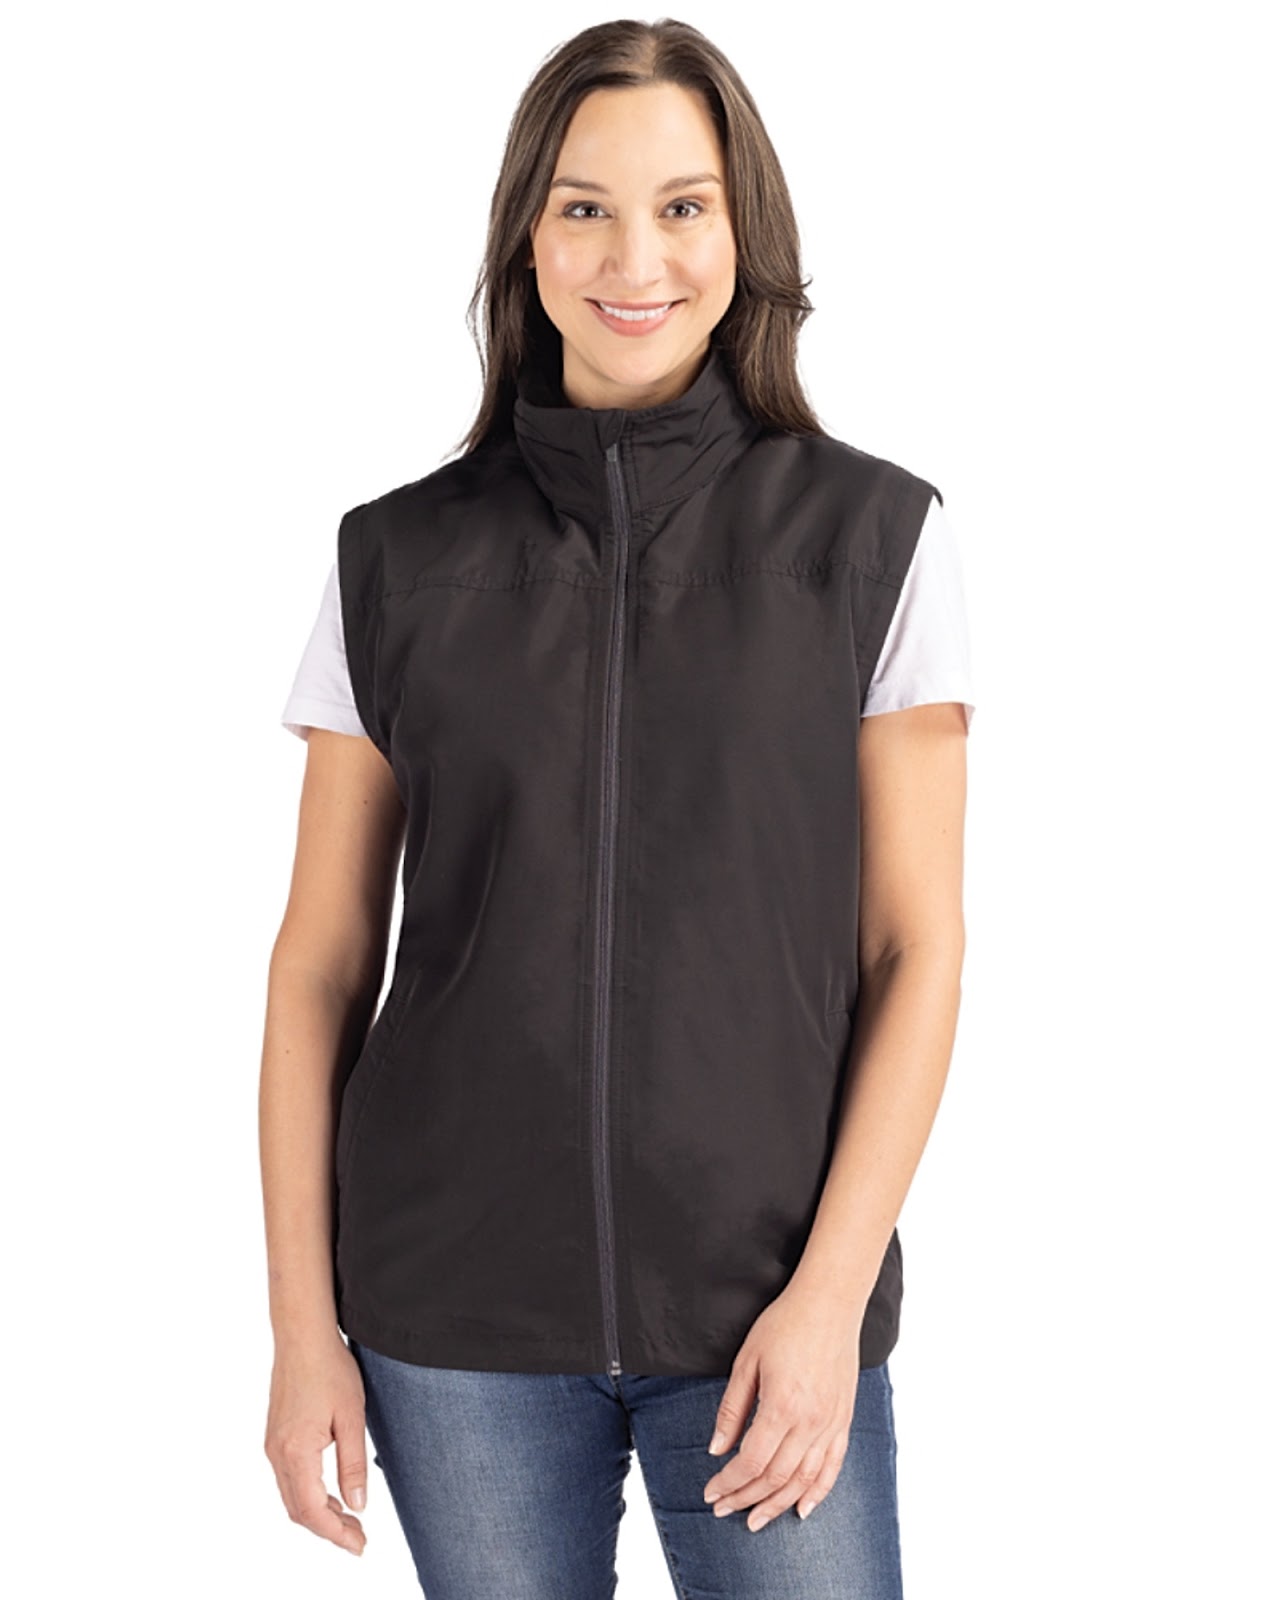 Best women's vest gift ideas for under $100